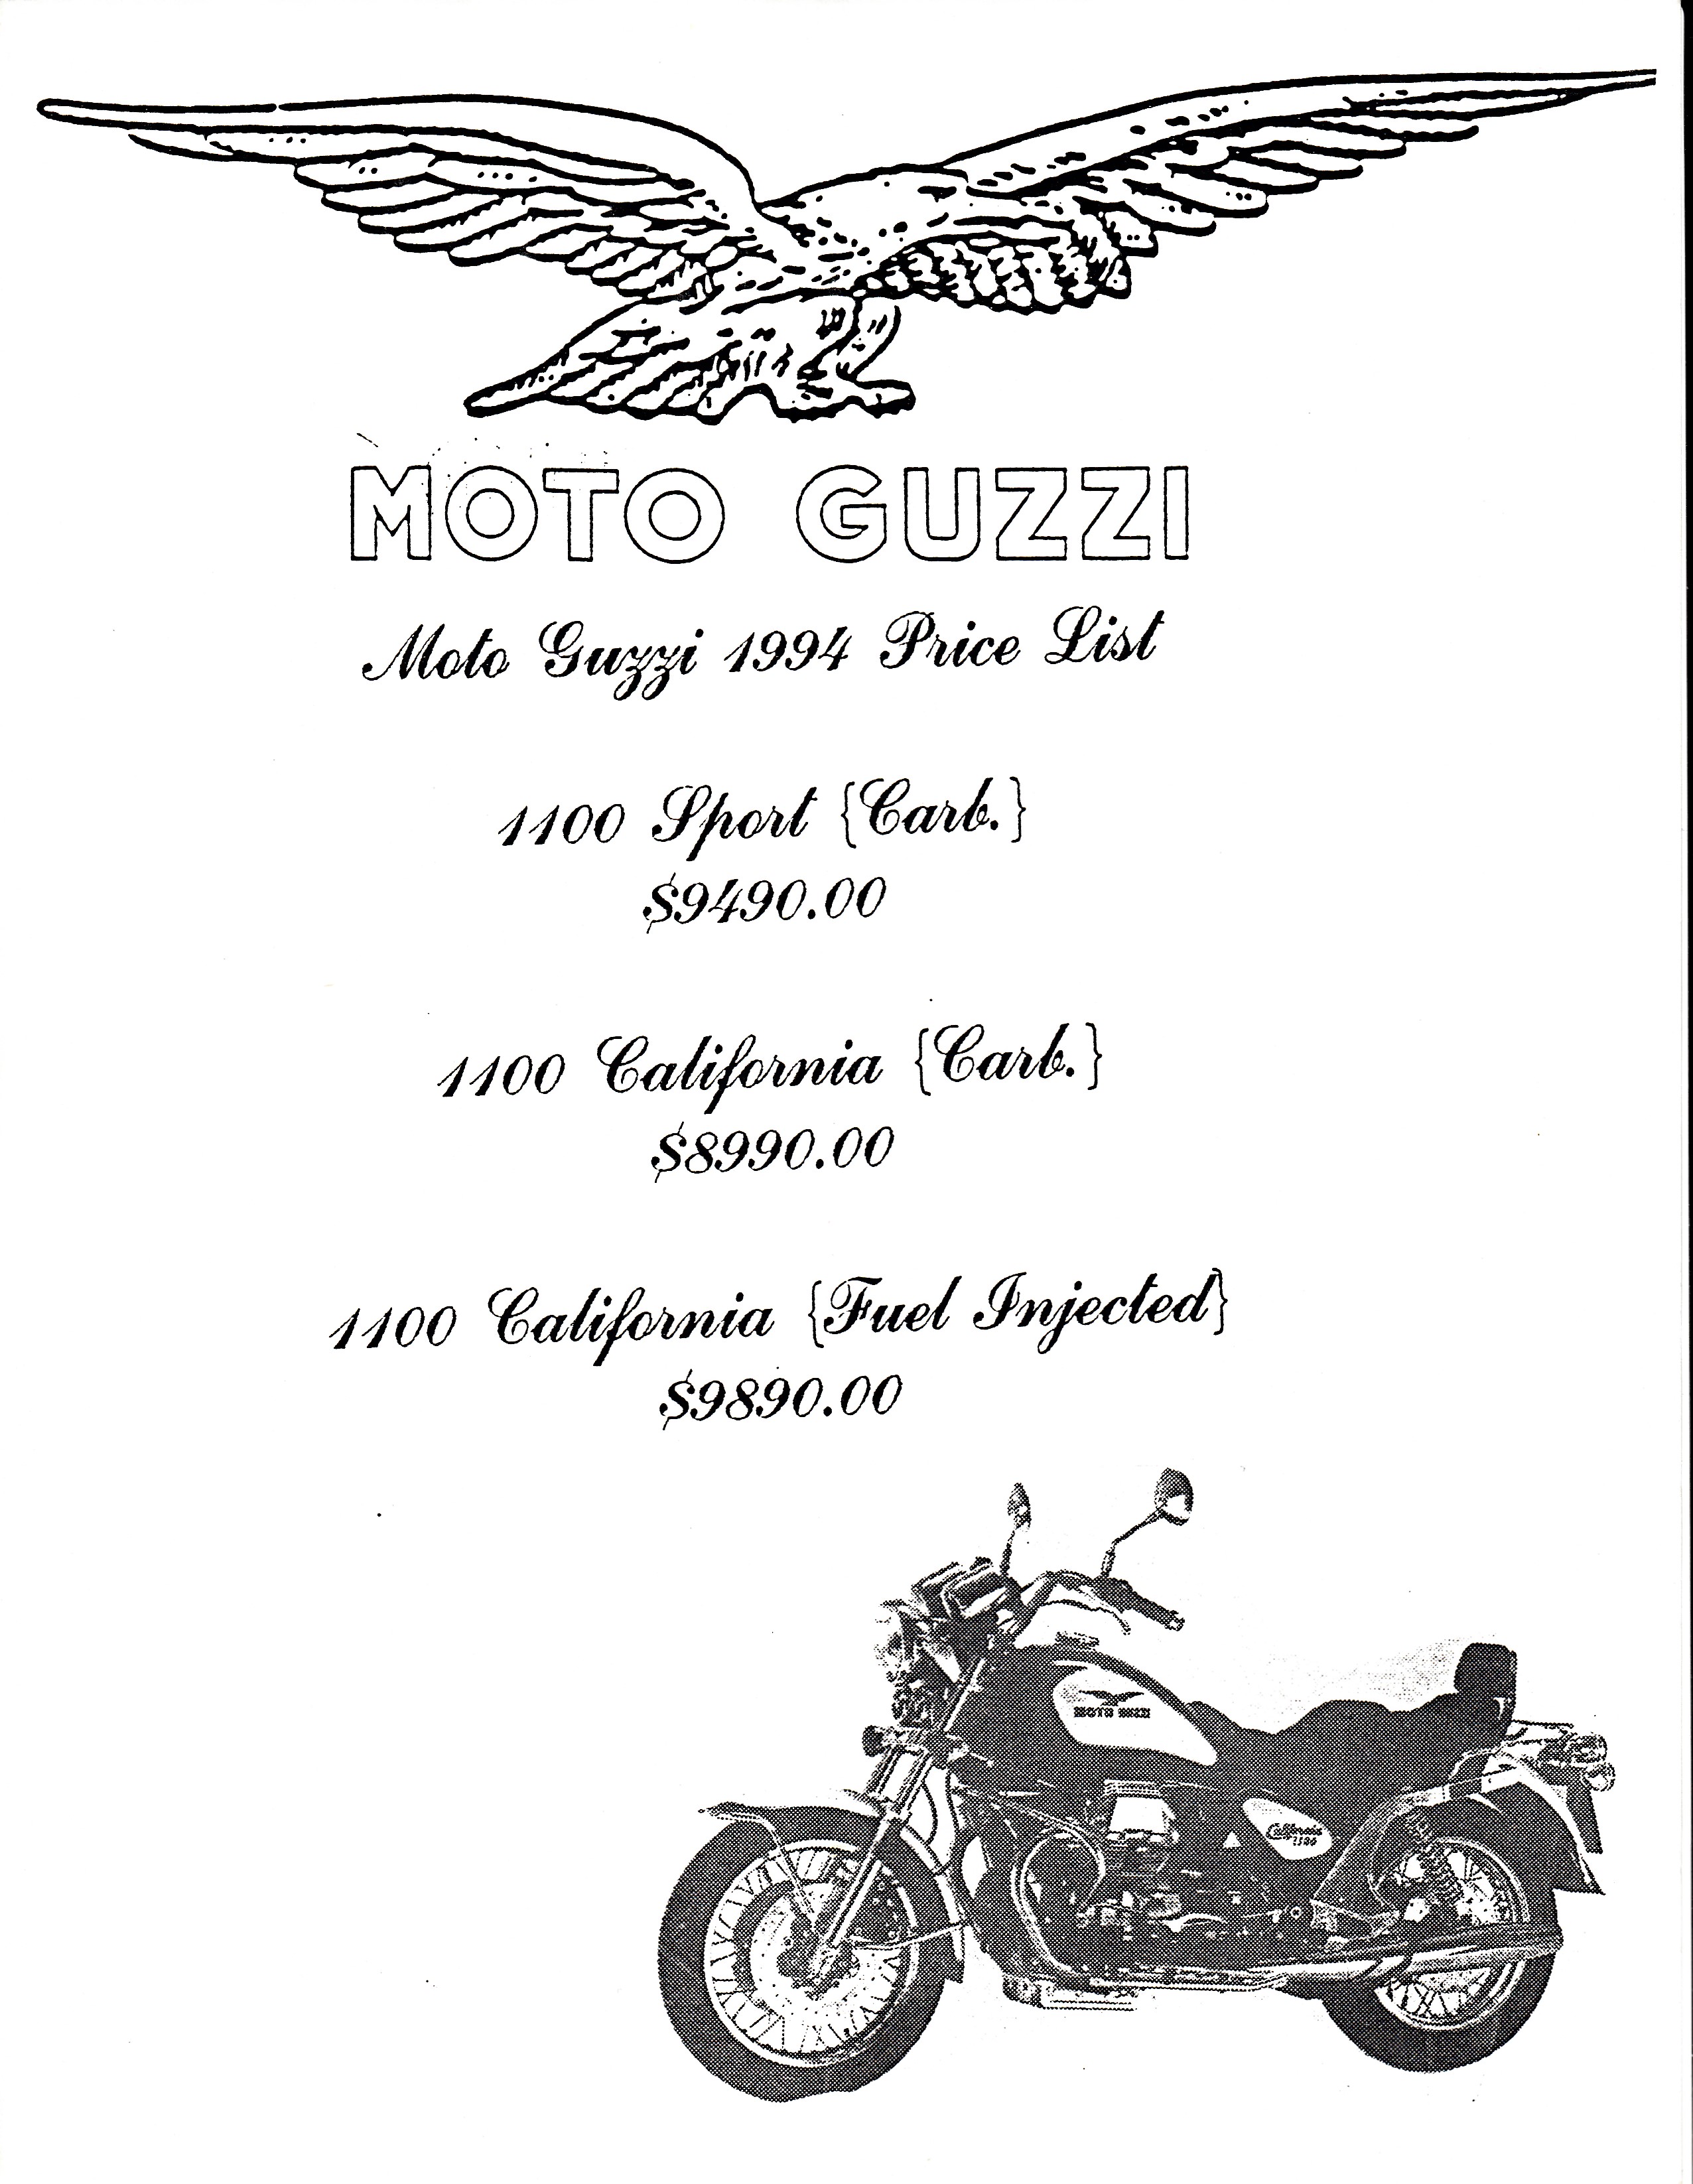 Price list - 1994 (Moto Guzzi)